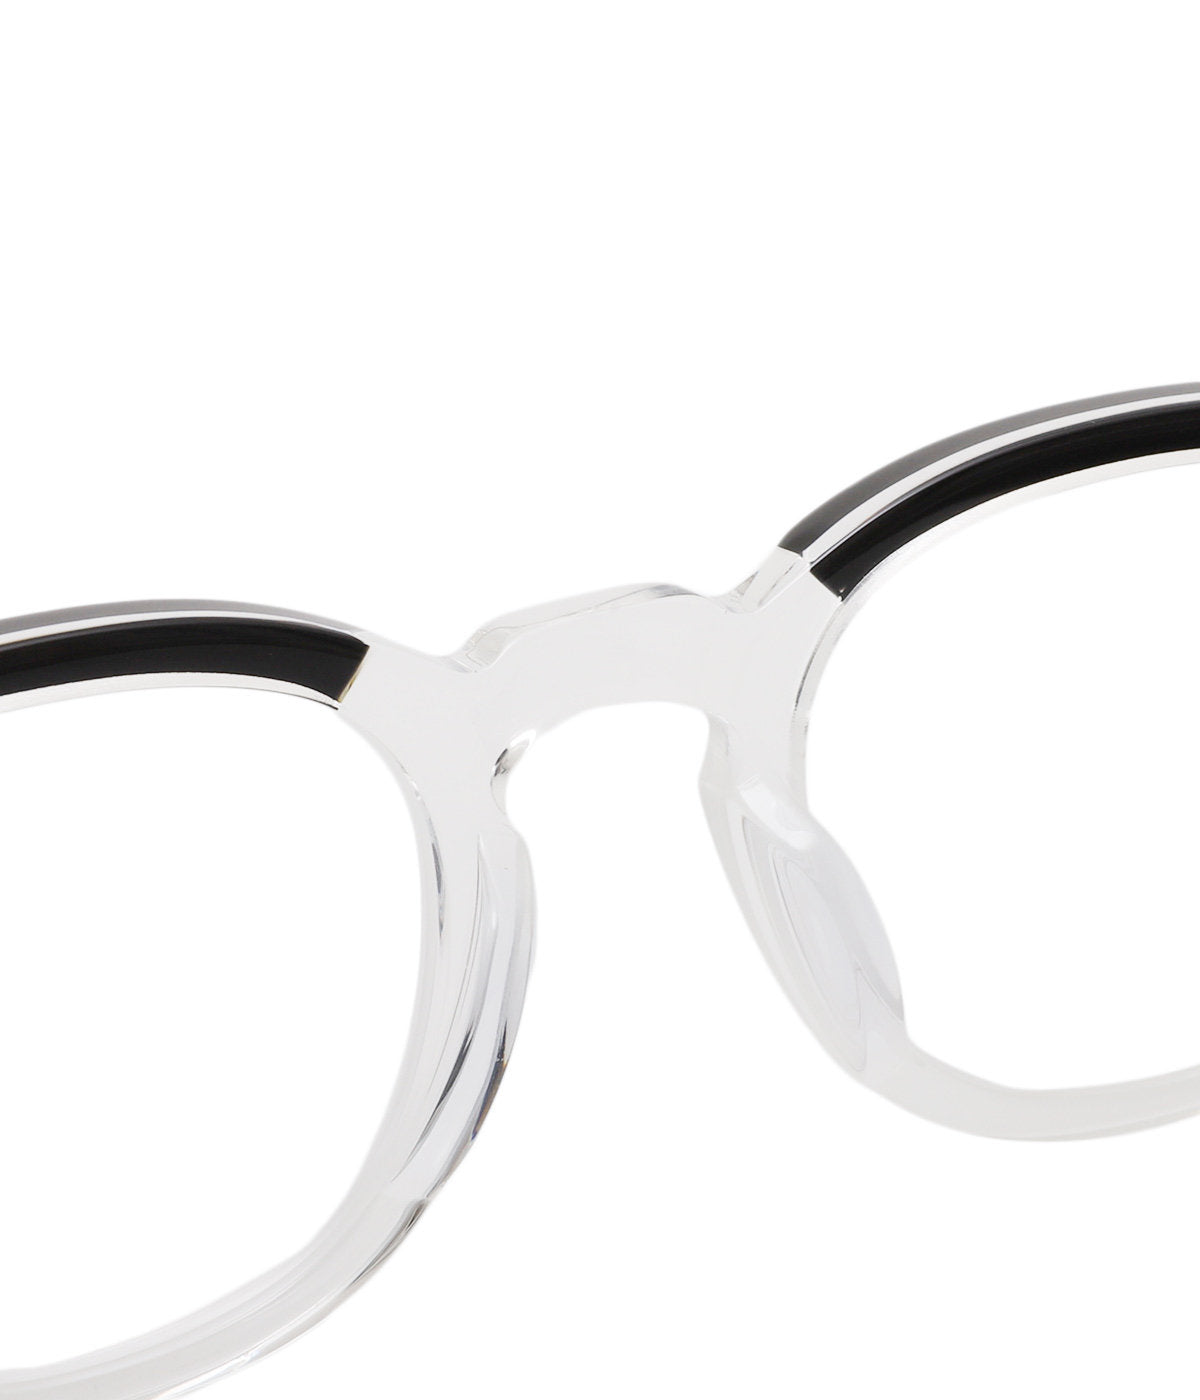 JULIUS TART OPTICAL AR Gold Edition Eyeglass Frame Black Clear Brow